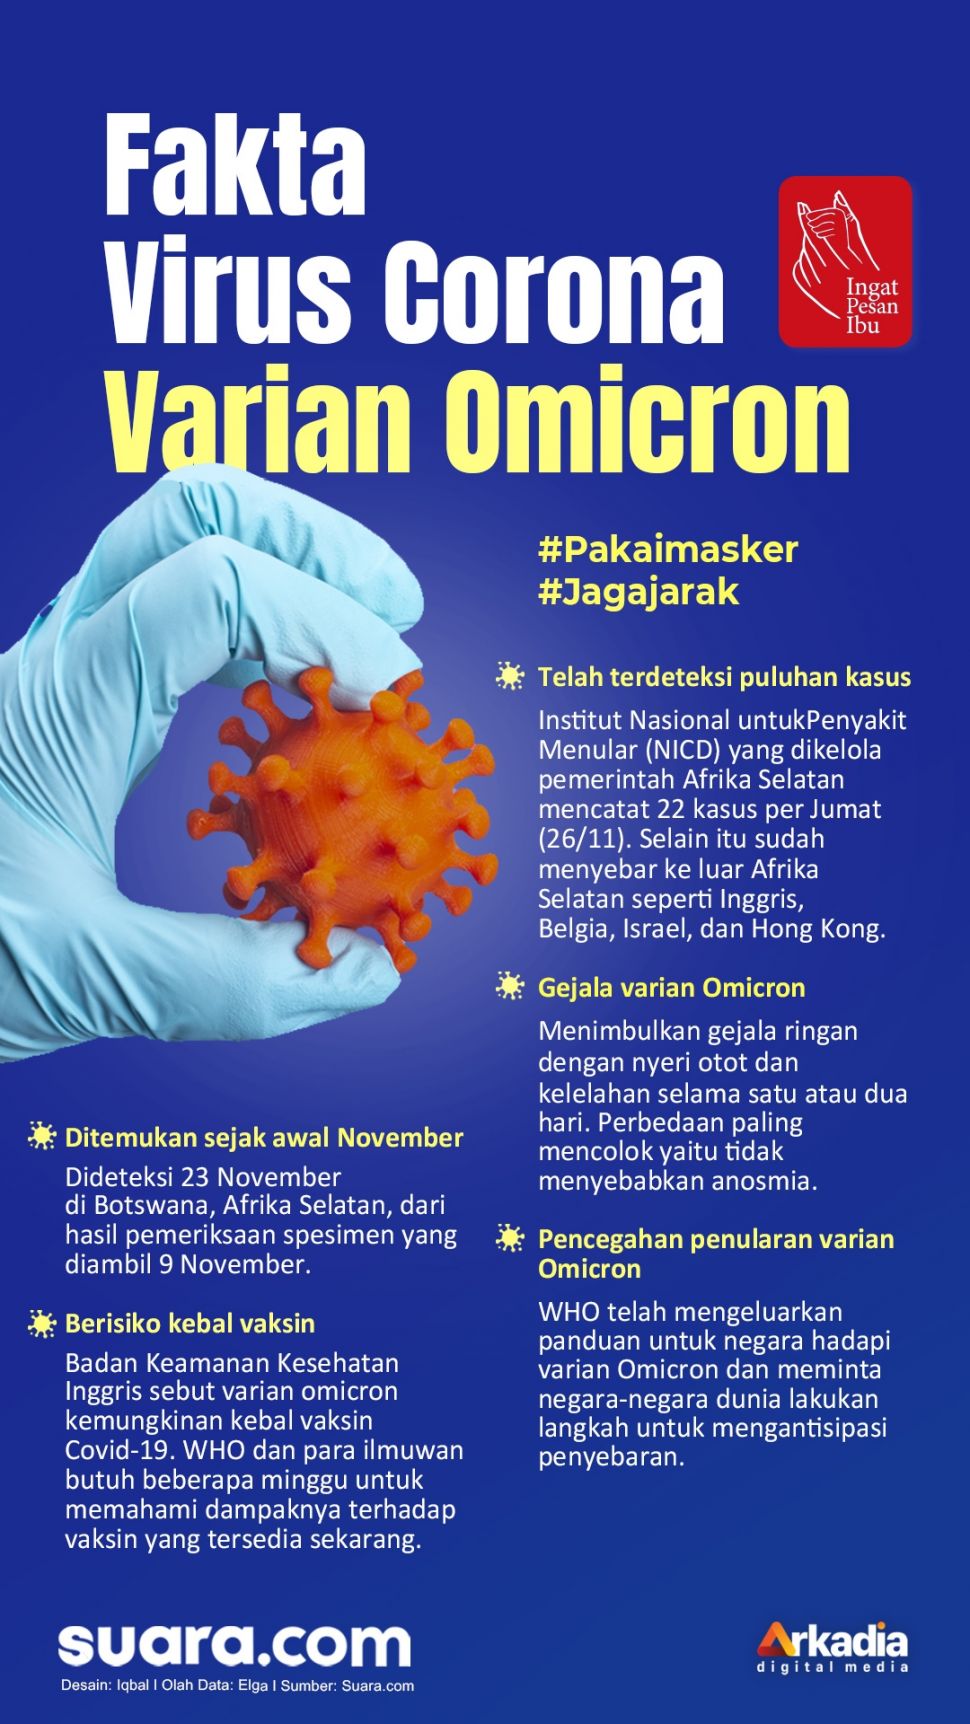 INFOGRAPHIC: Omicron Variant Corona Virus Facts